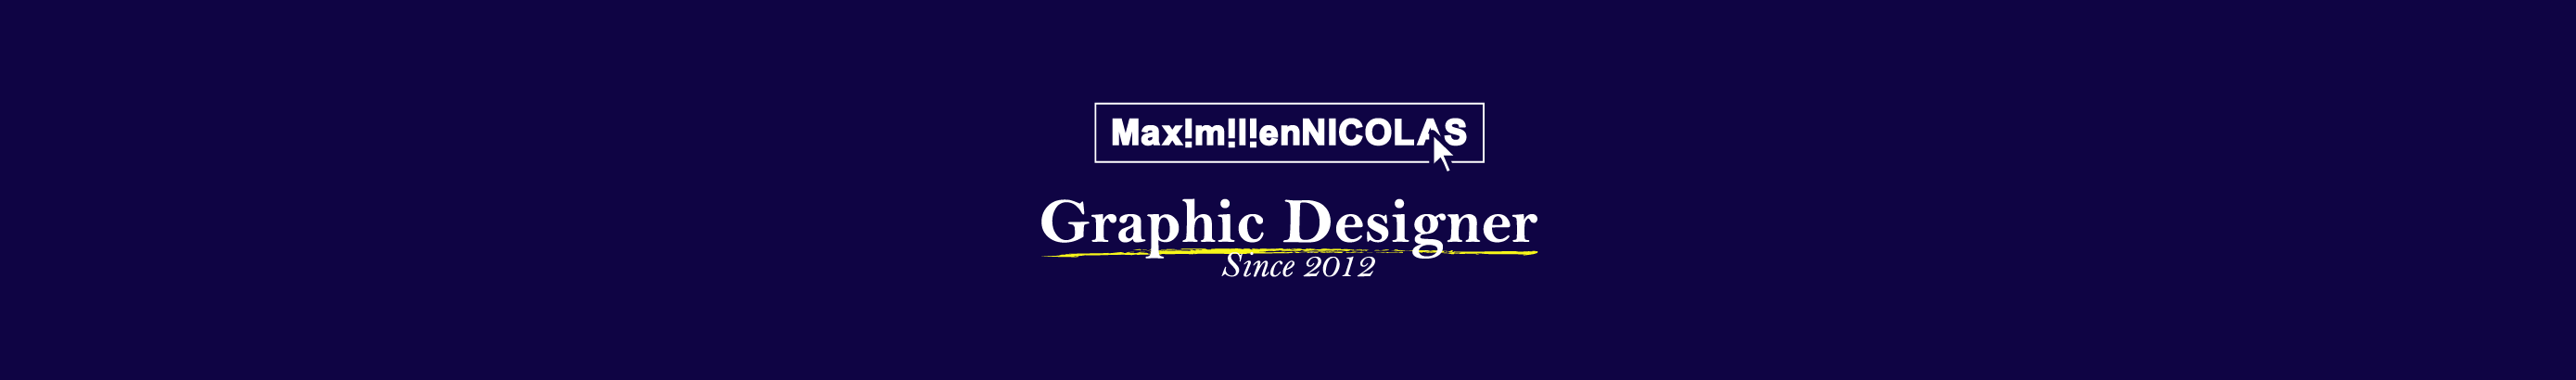 Banner profilu uživatele Maximilien Nicolas